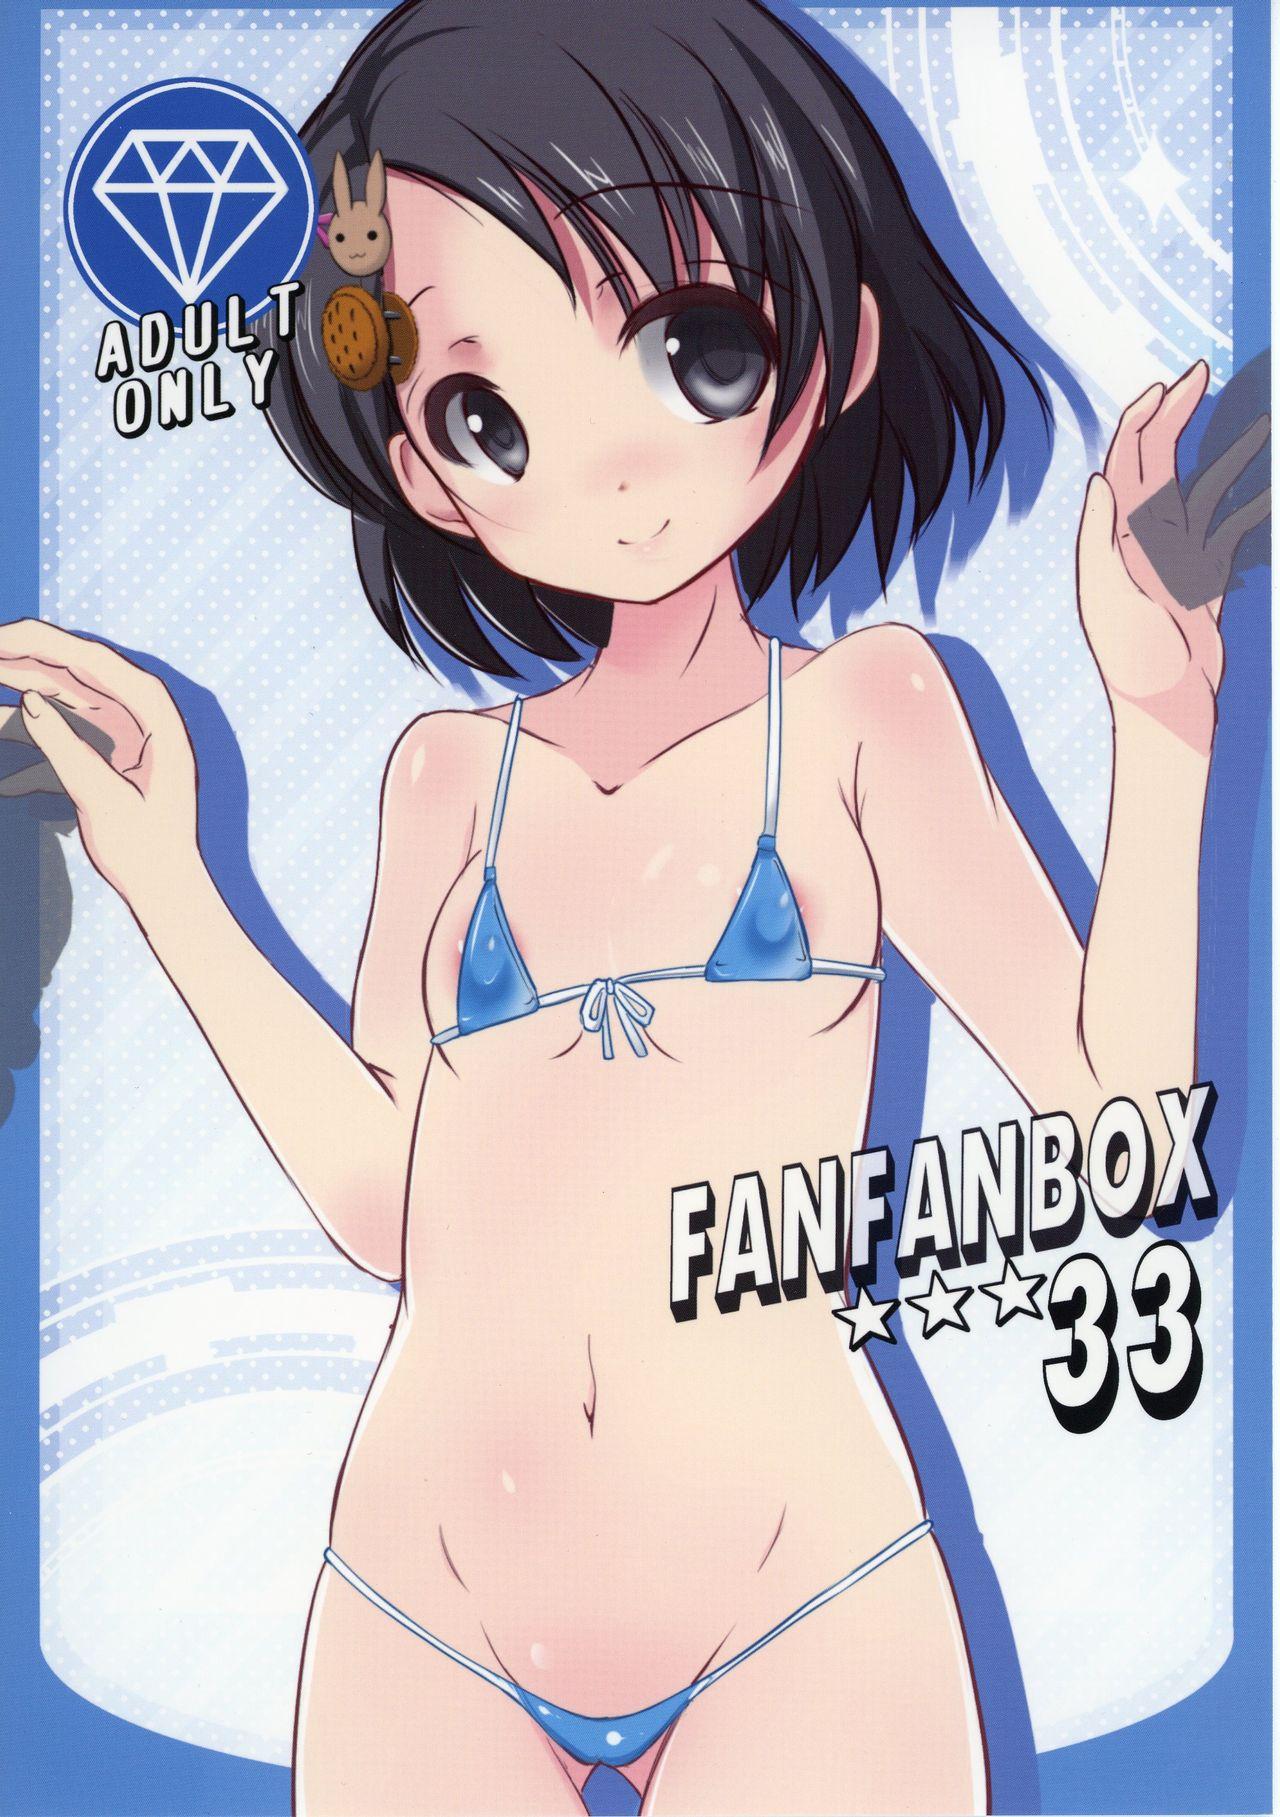 FanFanBox33 0